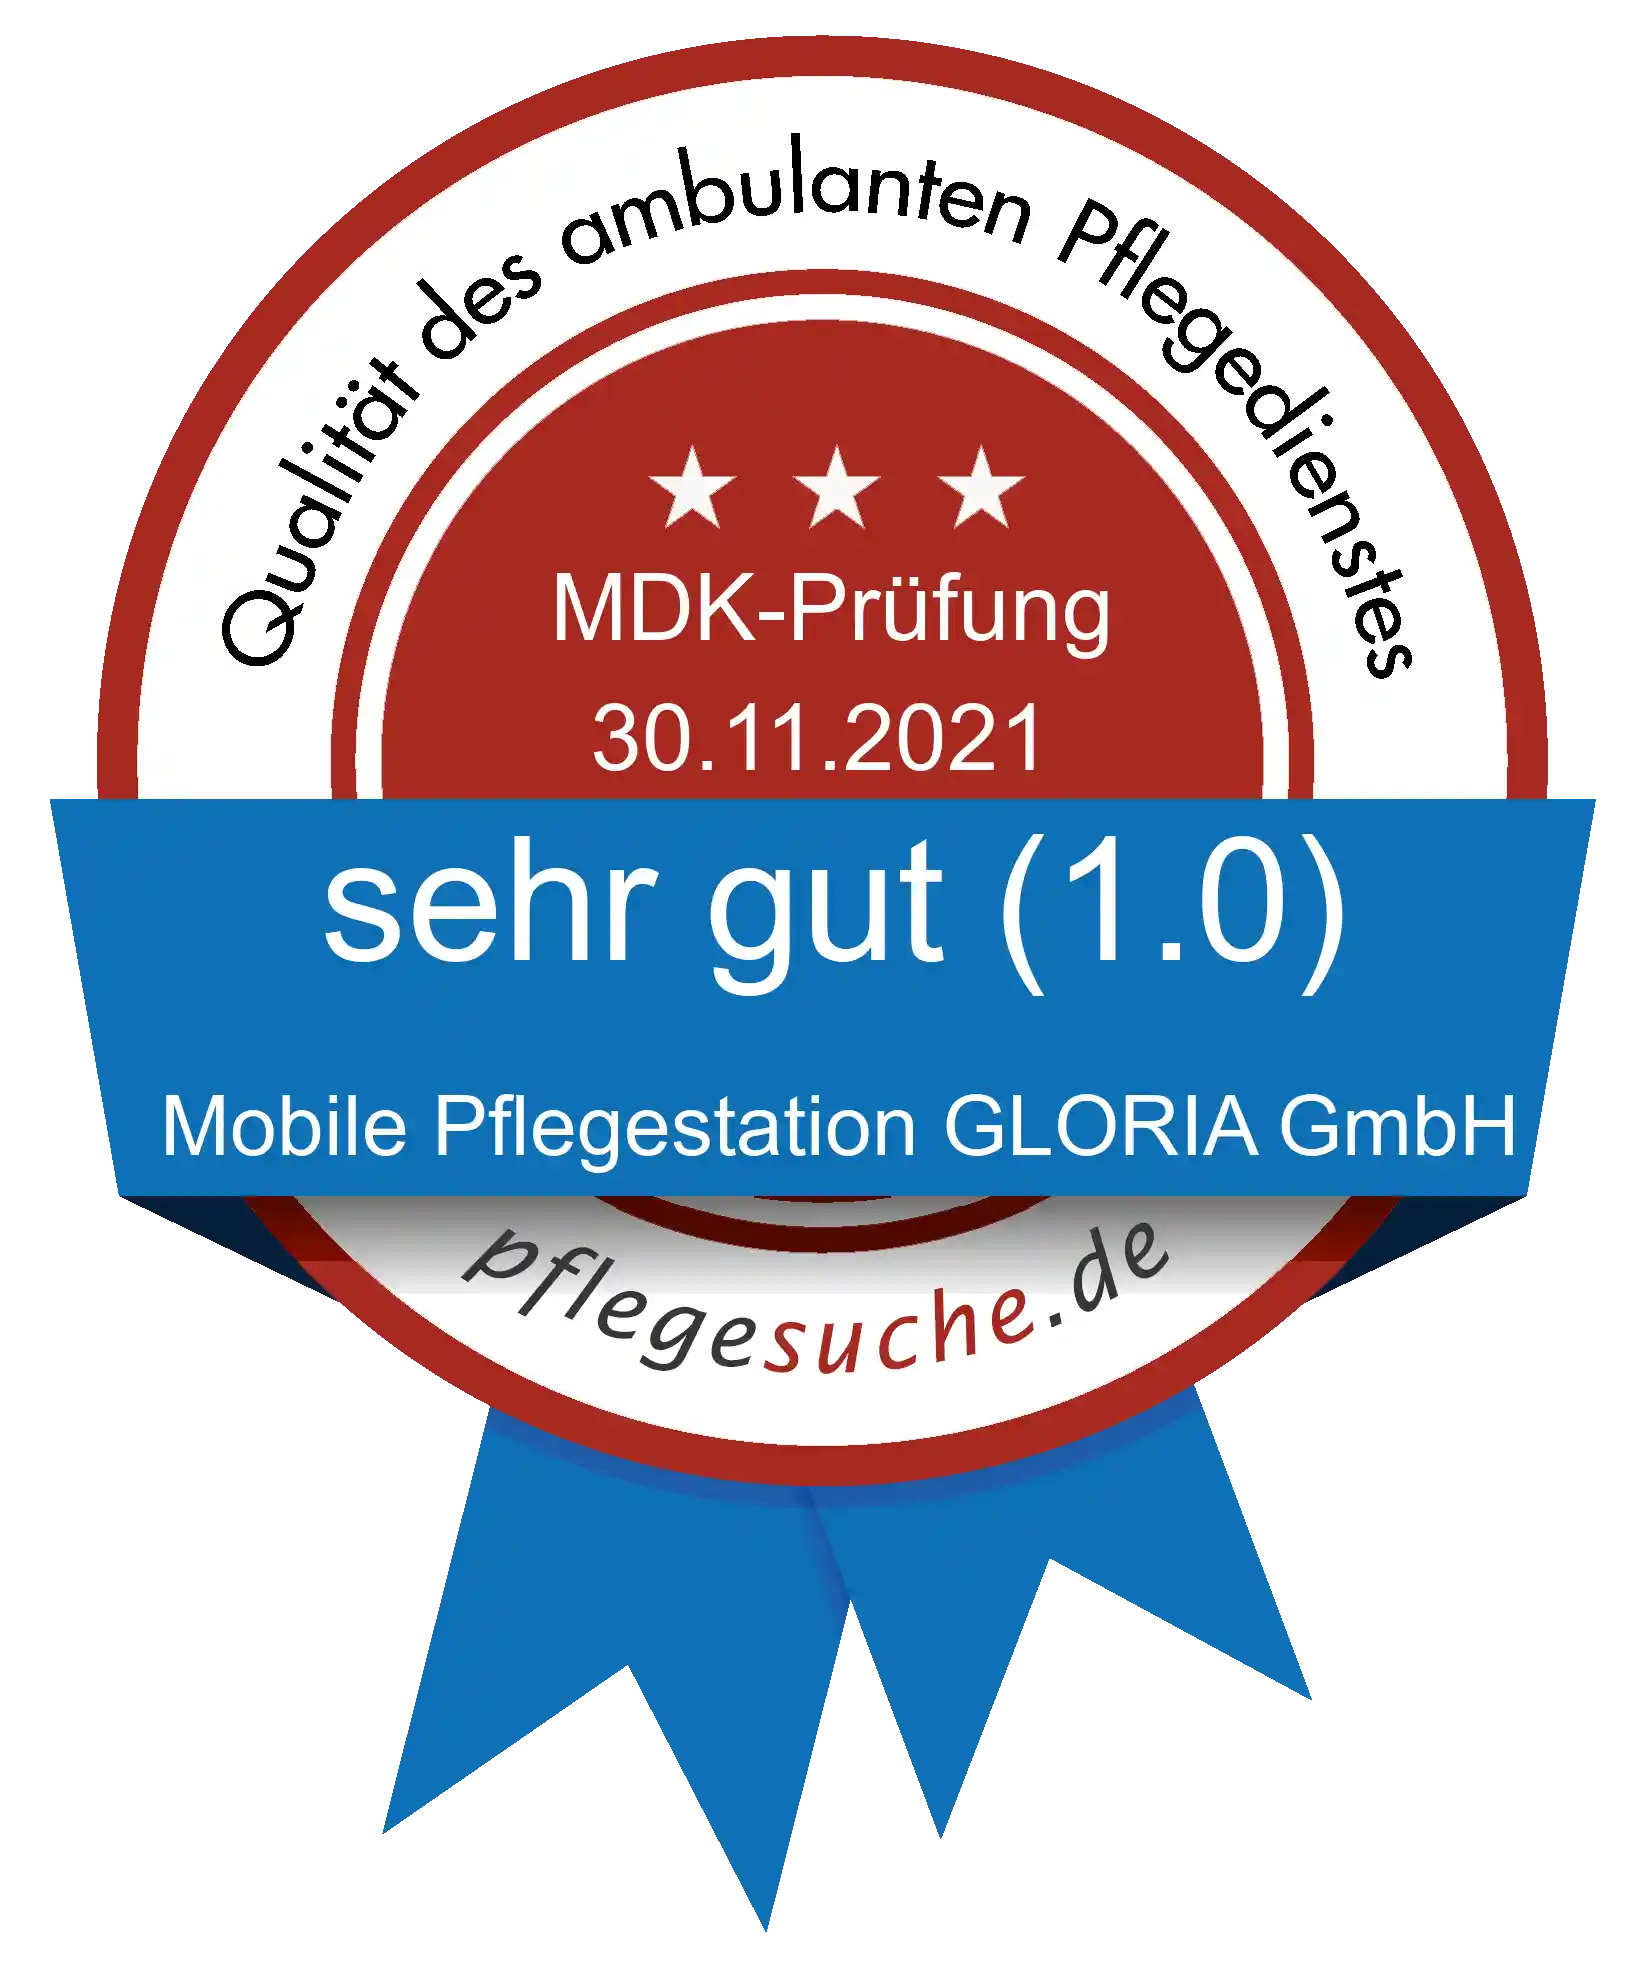 Siegel Benotung Mobile Pflegestation GLORIA GmbH